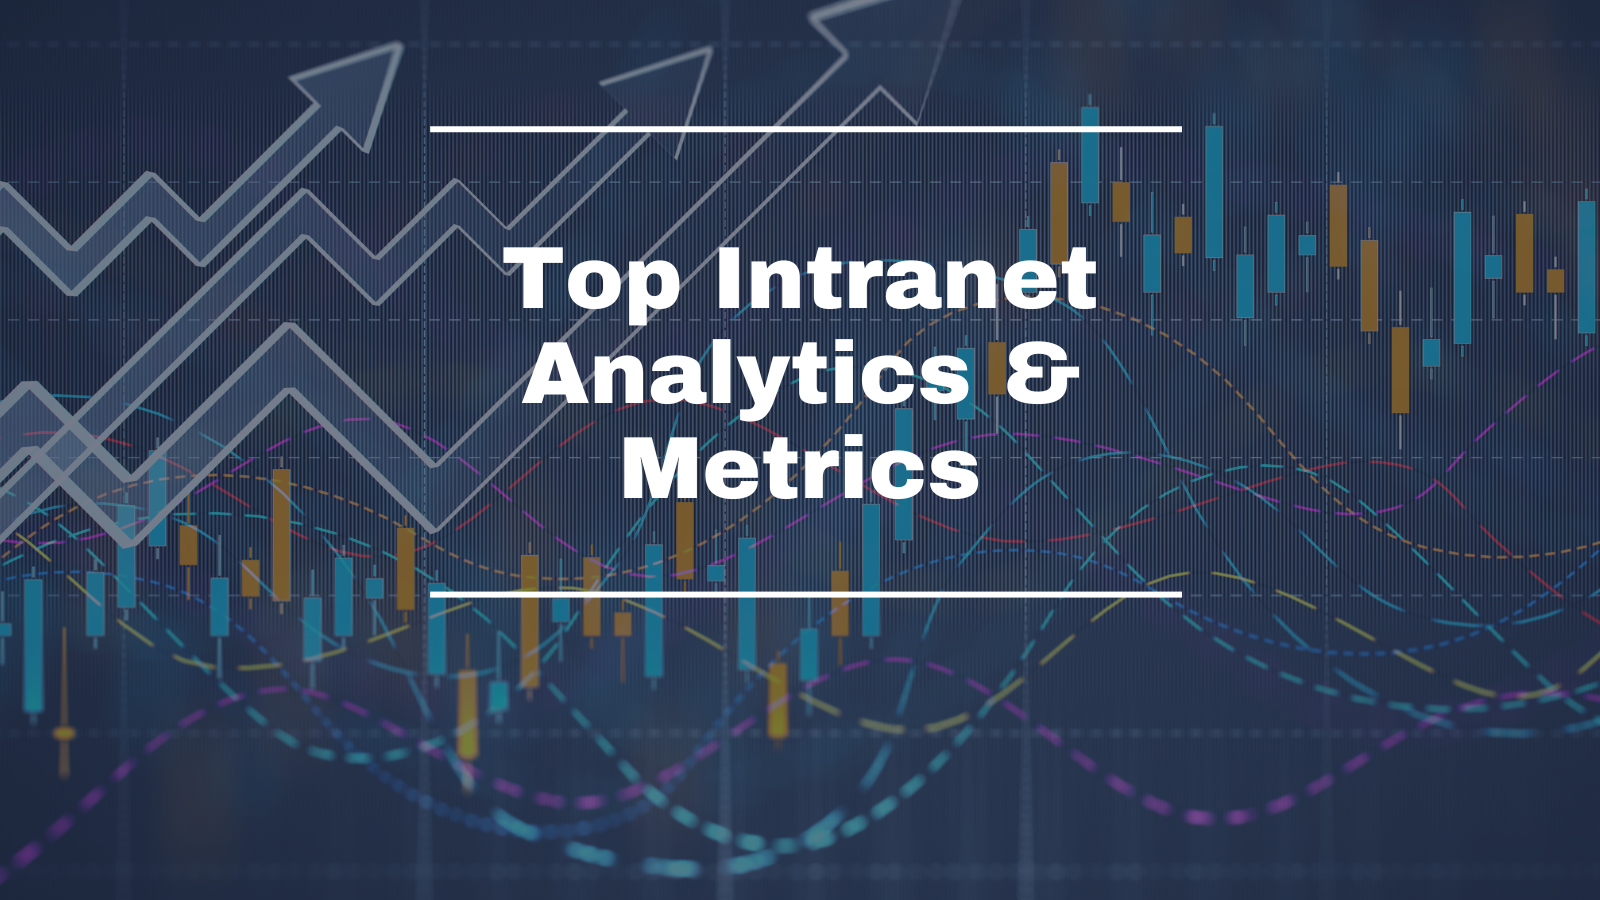 Top Intranet Analytics & Metrics Every Organization Should Track